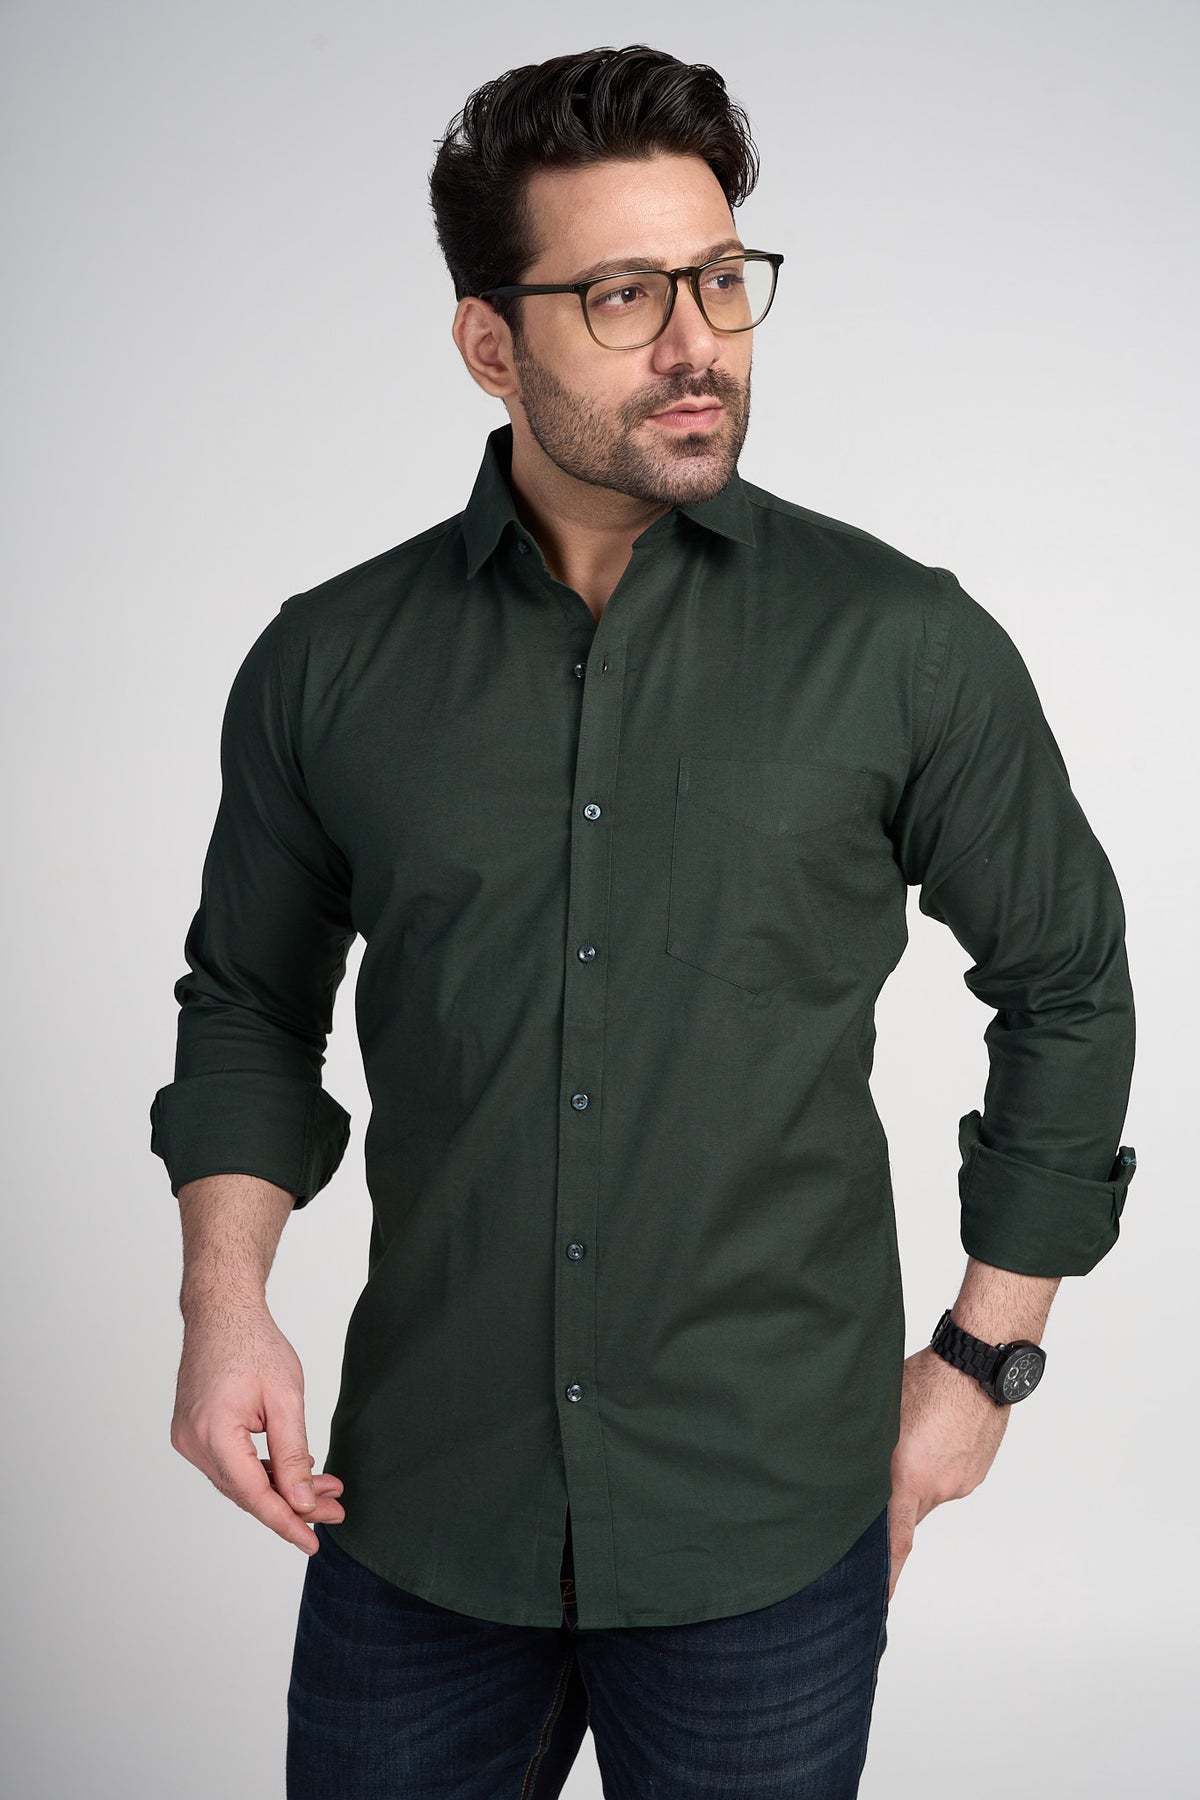 Tuscany Green - Oxford slim fit shirt